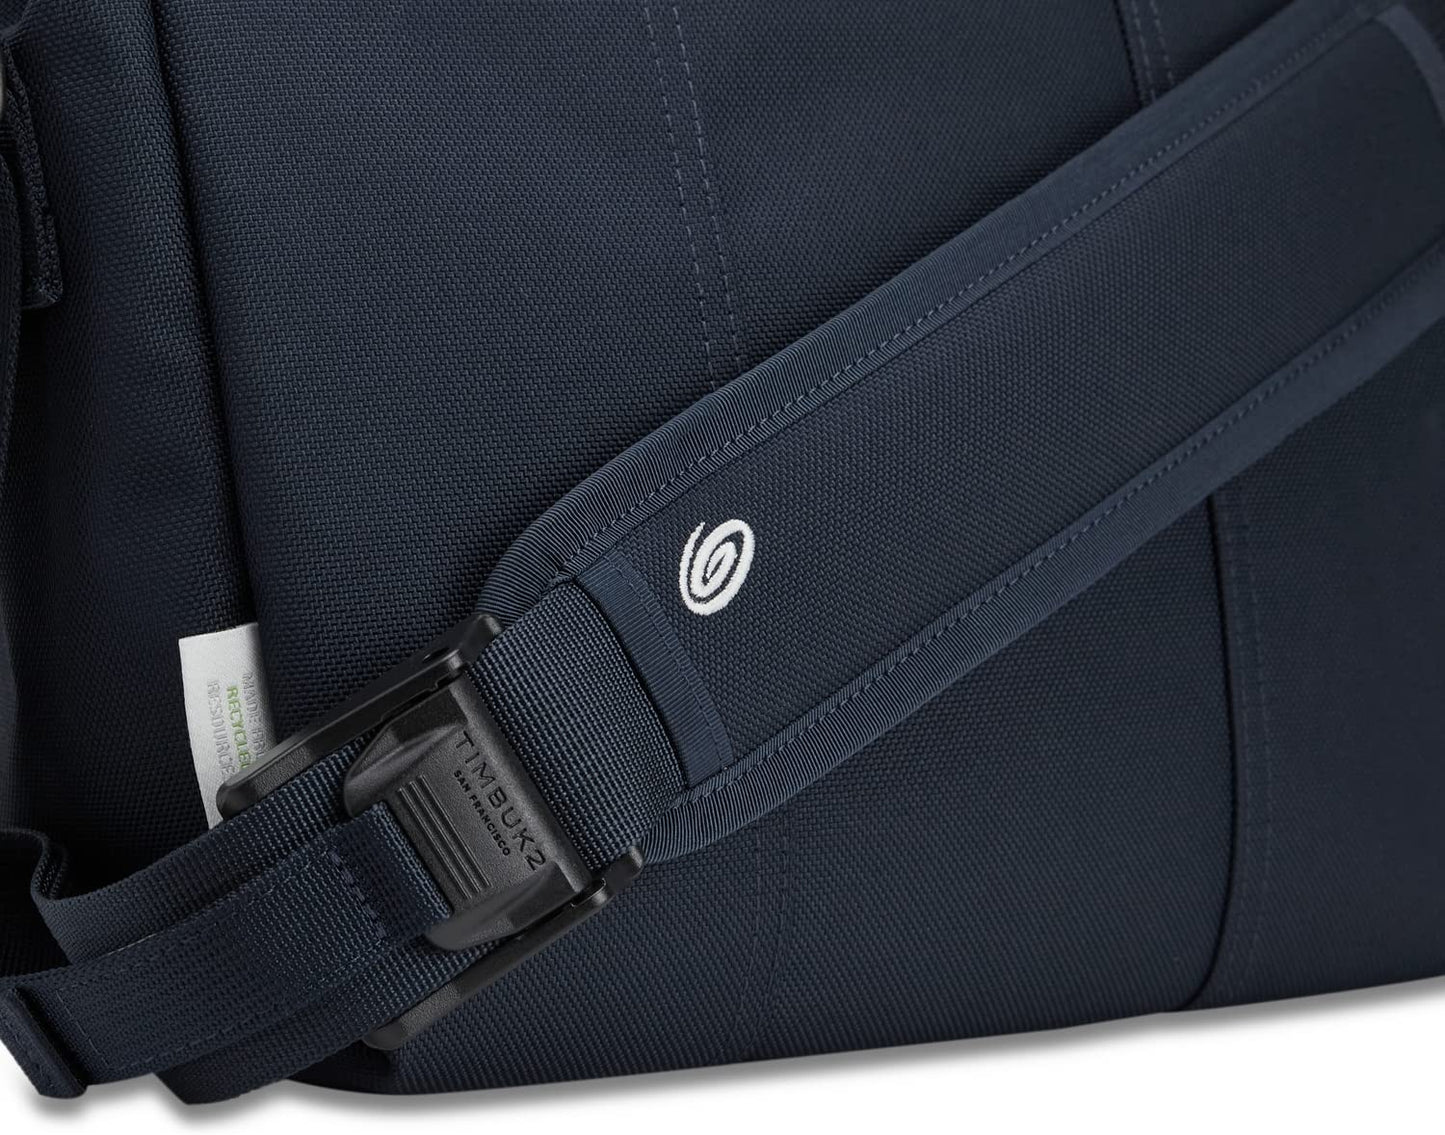 Classic Messenger Bag - Durable, Water-Resistant, fits 13", 15", 17" Laptop